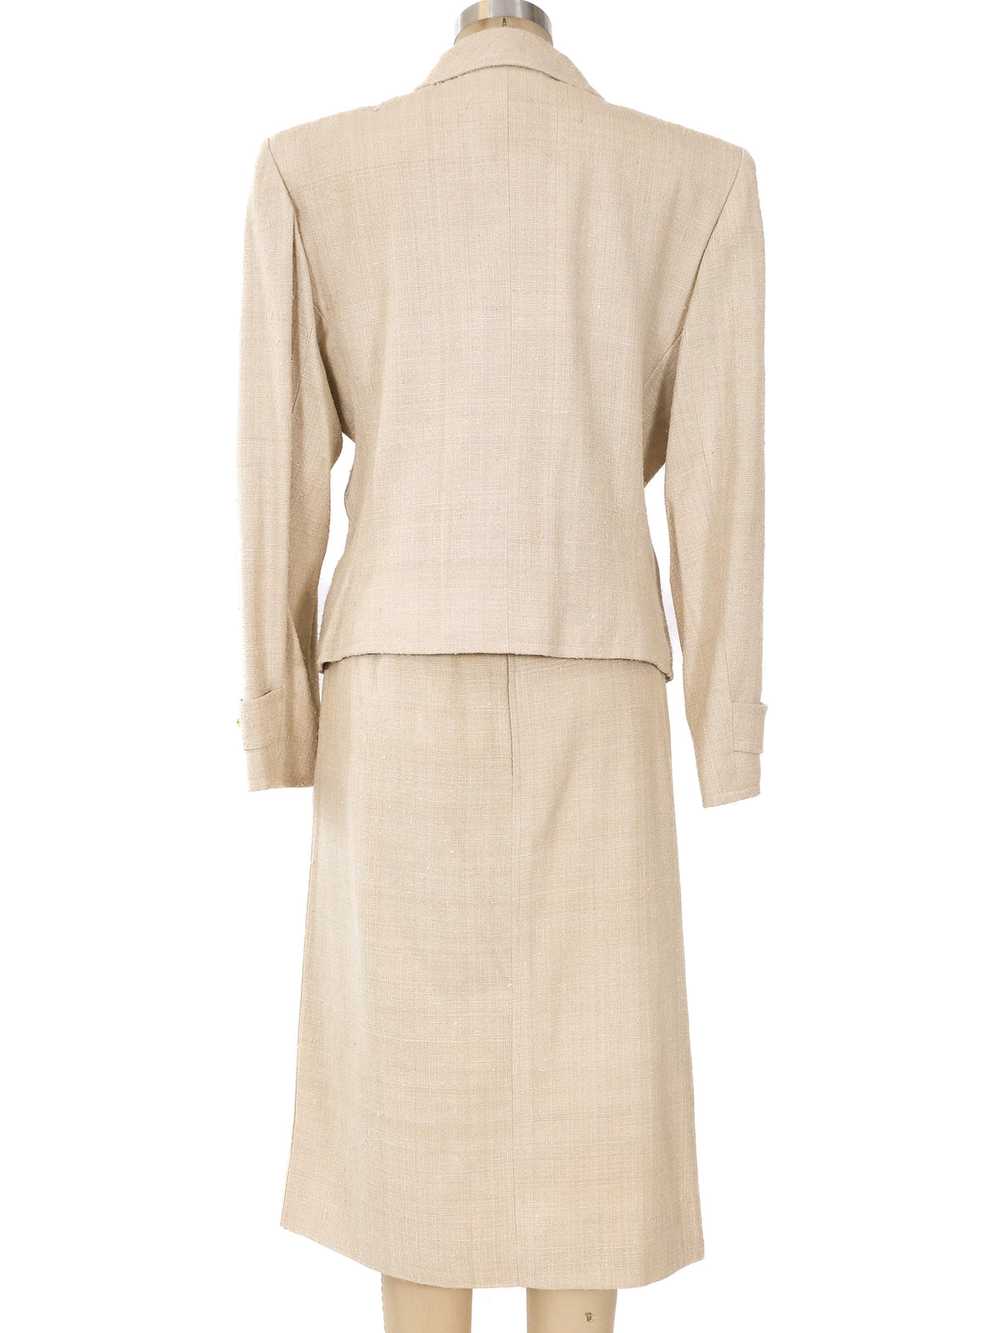 Yves Saint Laurent Natural Silk Skirt Suit - image 4